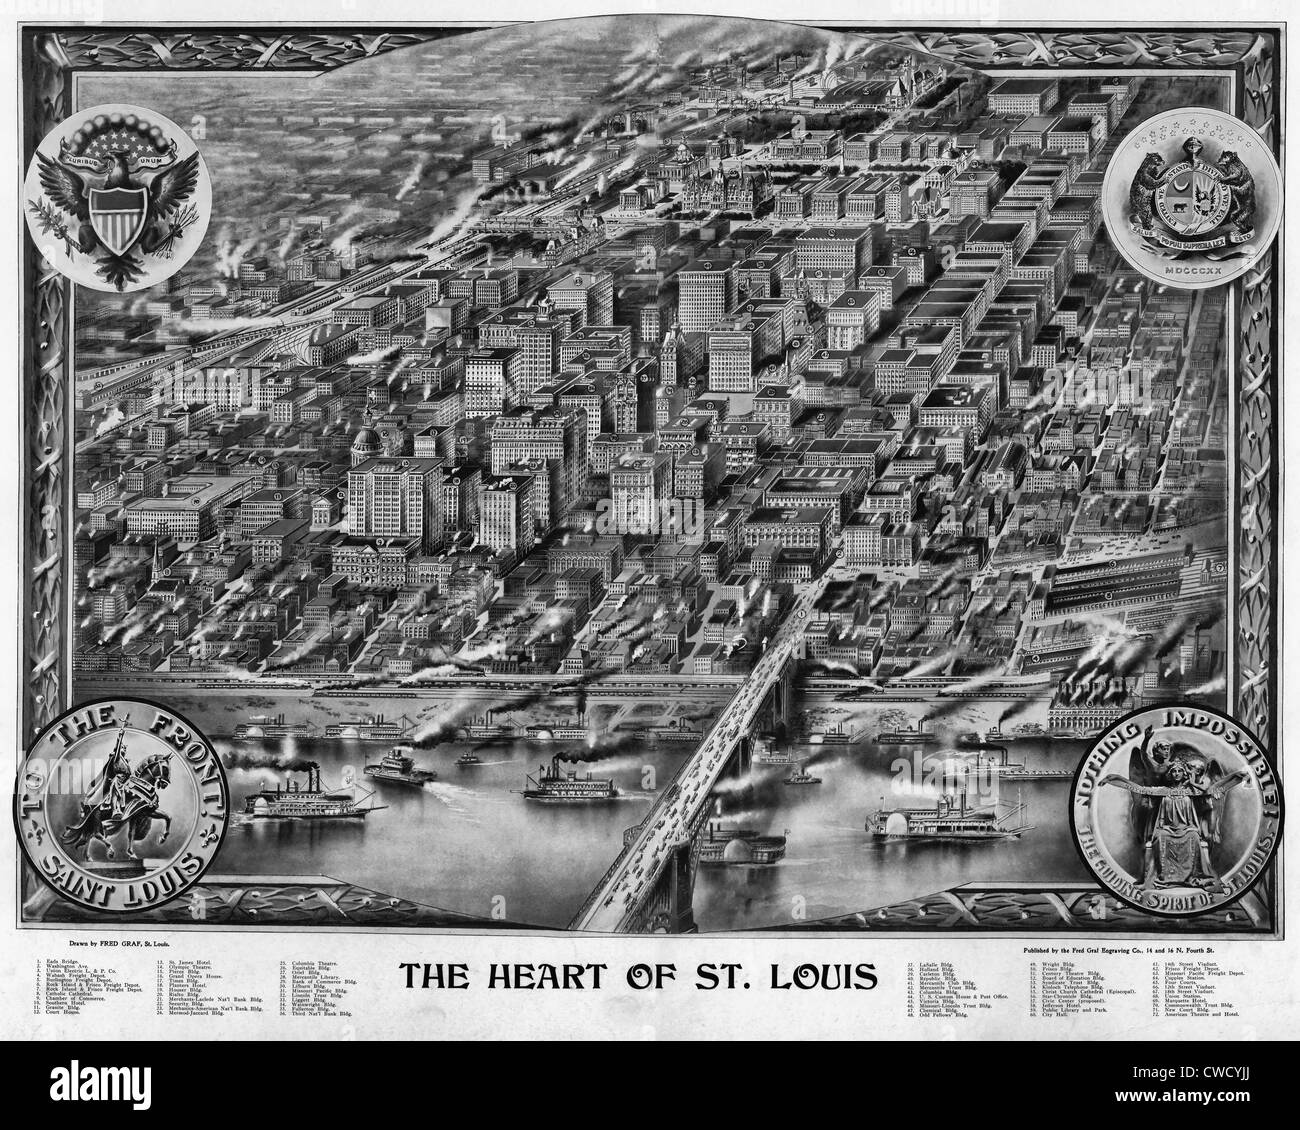 St. Louis, 1907